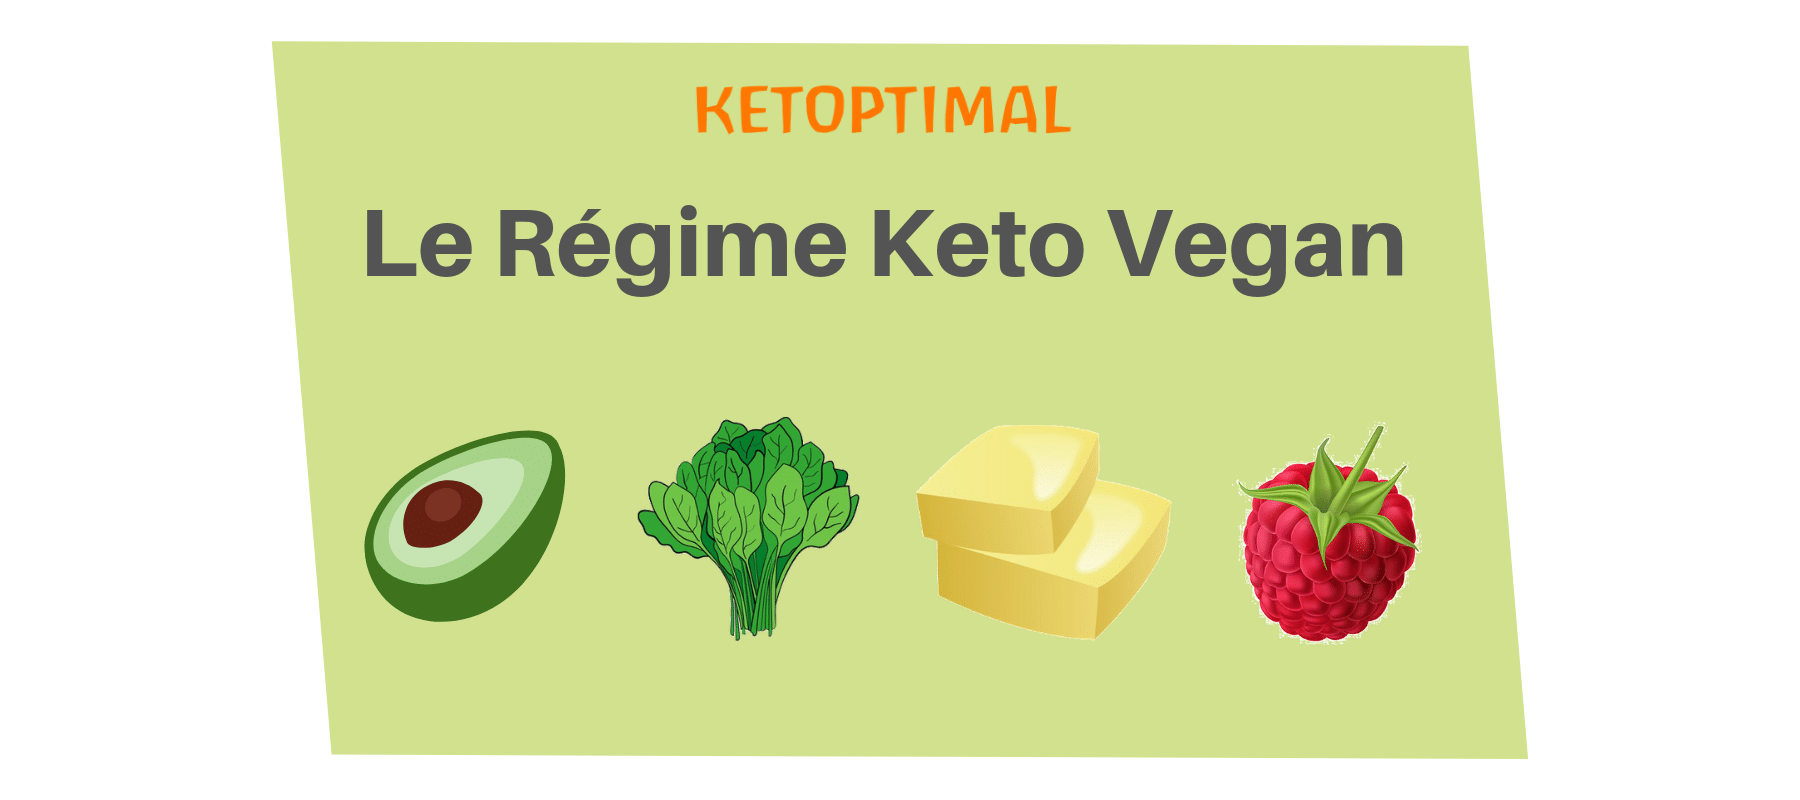 keto diet, régime keto, régime cétogène, diète keto, diète cétogène, alimentation keto, alimentation cétogène, ketoptimal, régime keto vegan, vegan